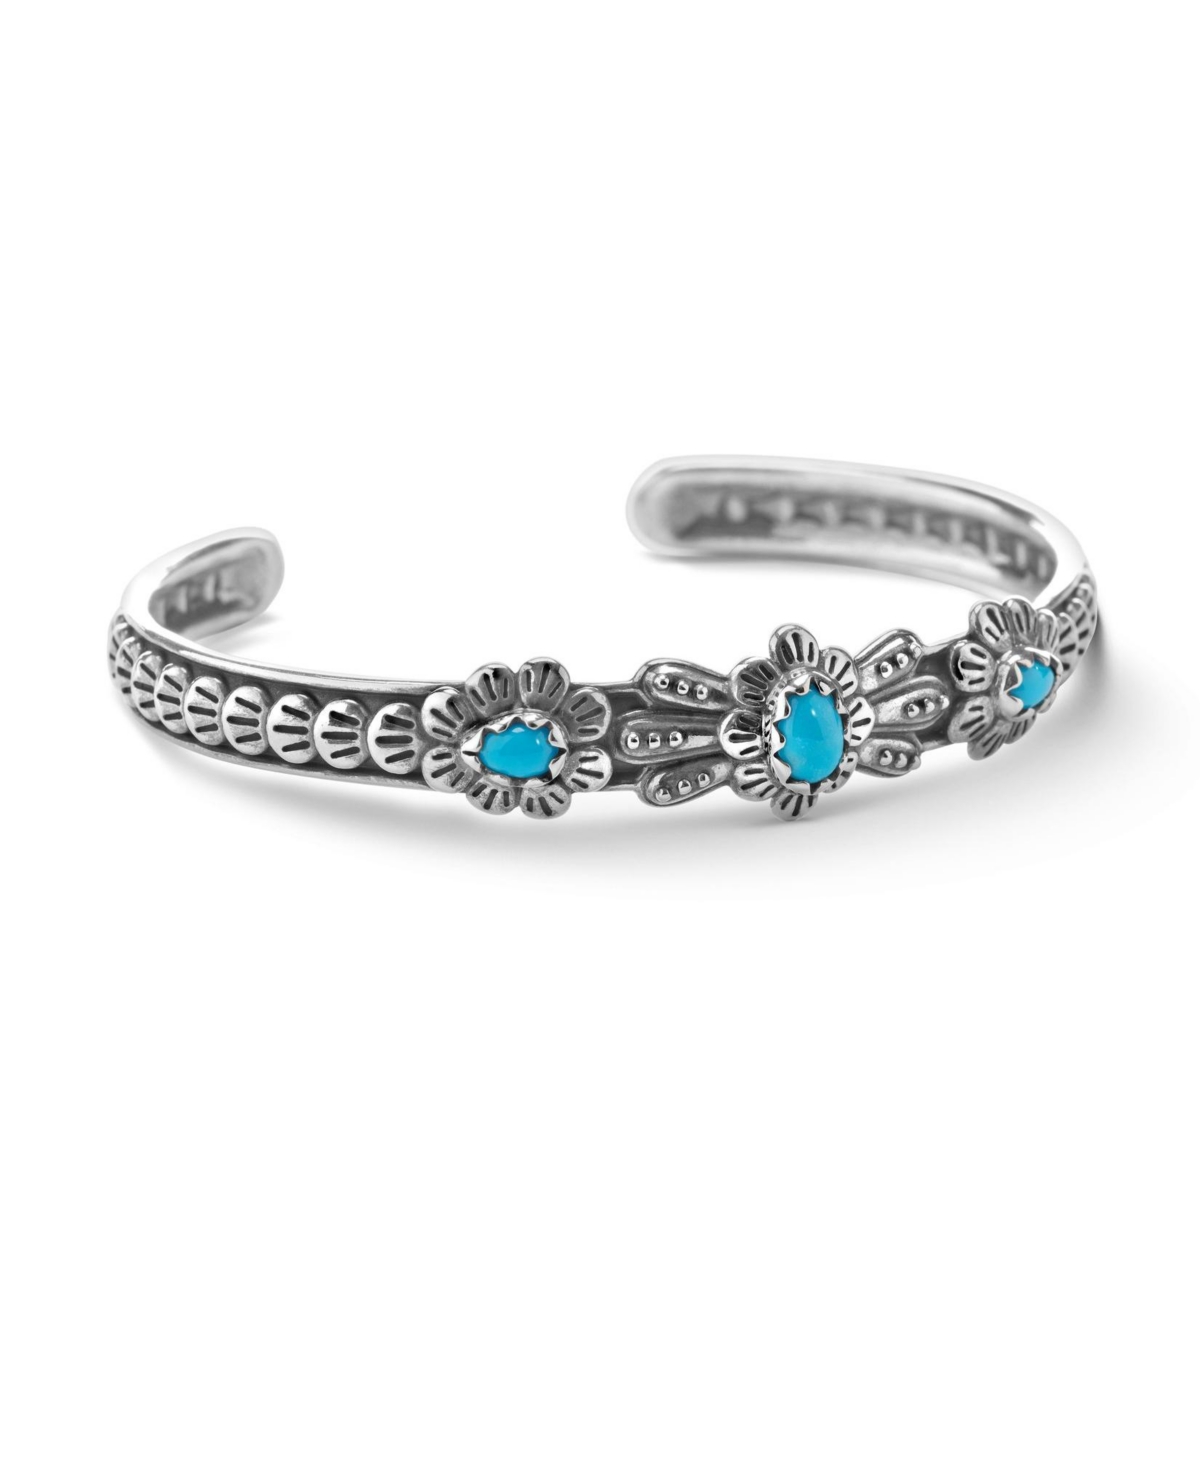 American West Sterling Silver Women's Cuff Bracelet Sleeping Beauty Turquoise Gemstone Flower Concha Design Size Small - Large -